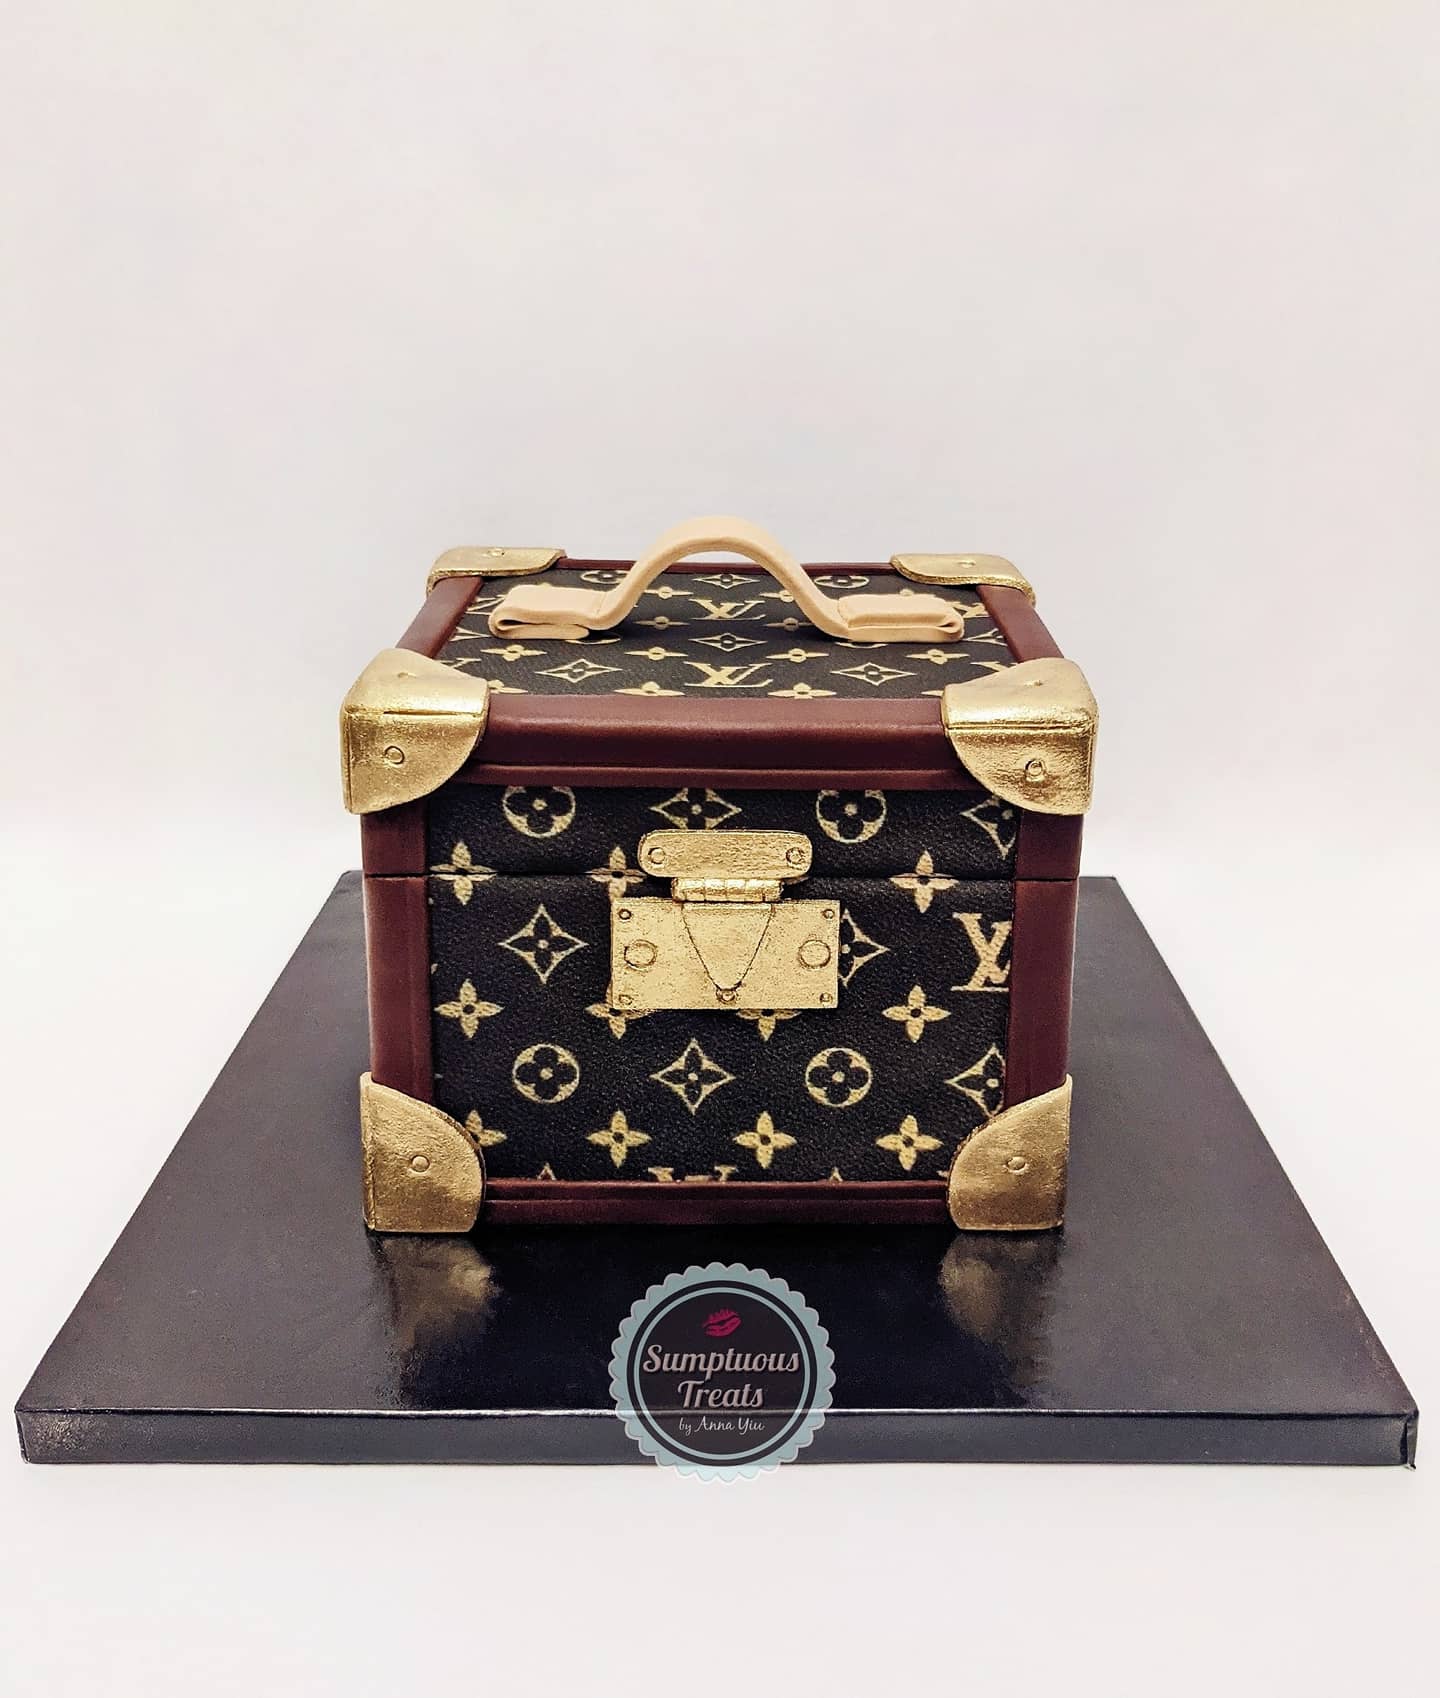 Sumptuous Treats on X: LV Louis Vuitton Inspired Trunk Hard Case